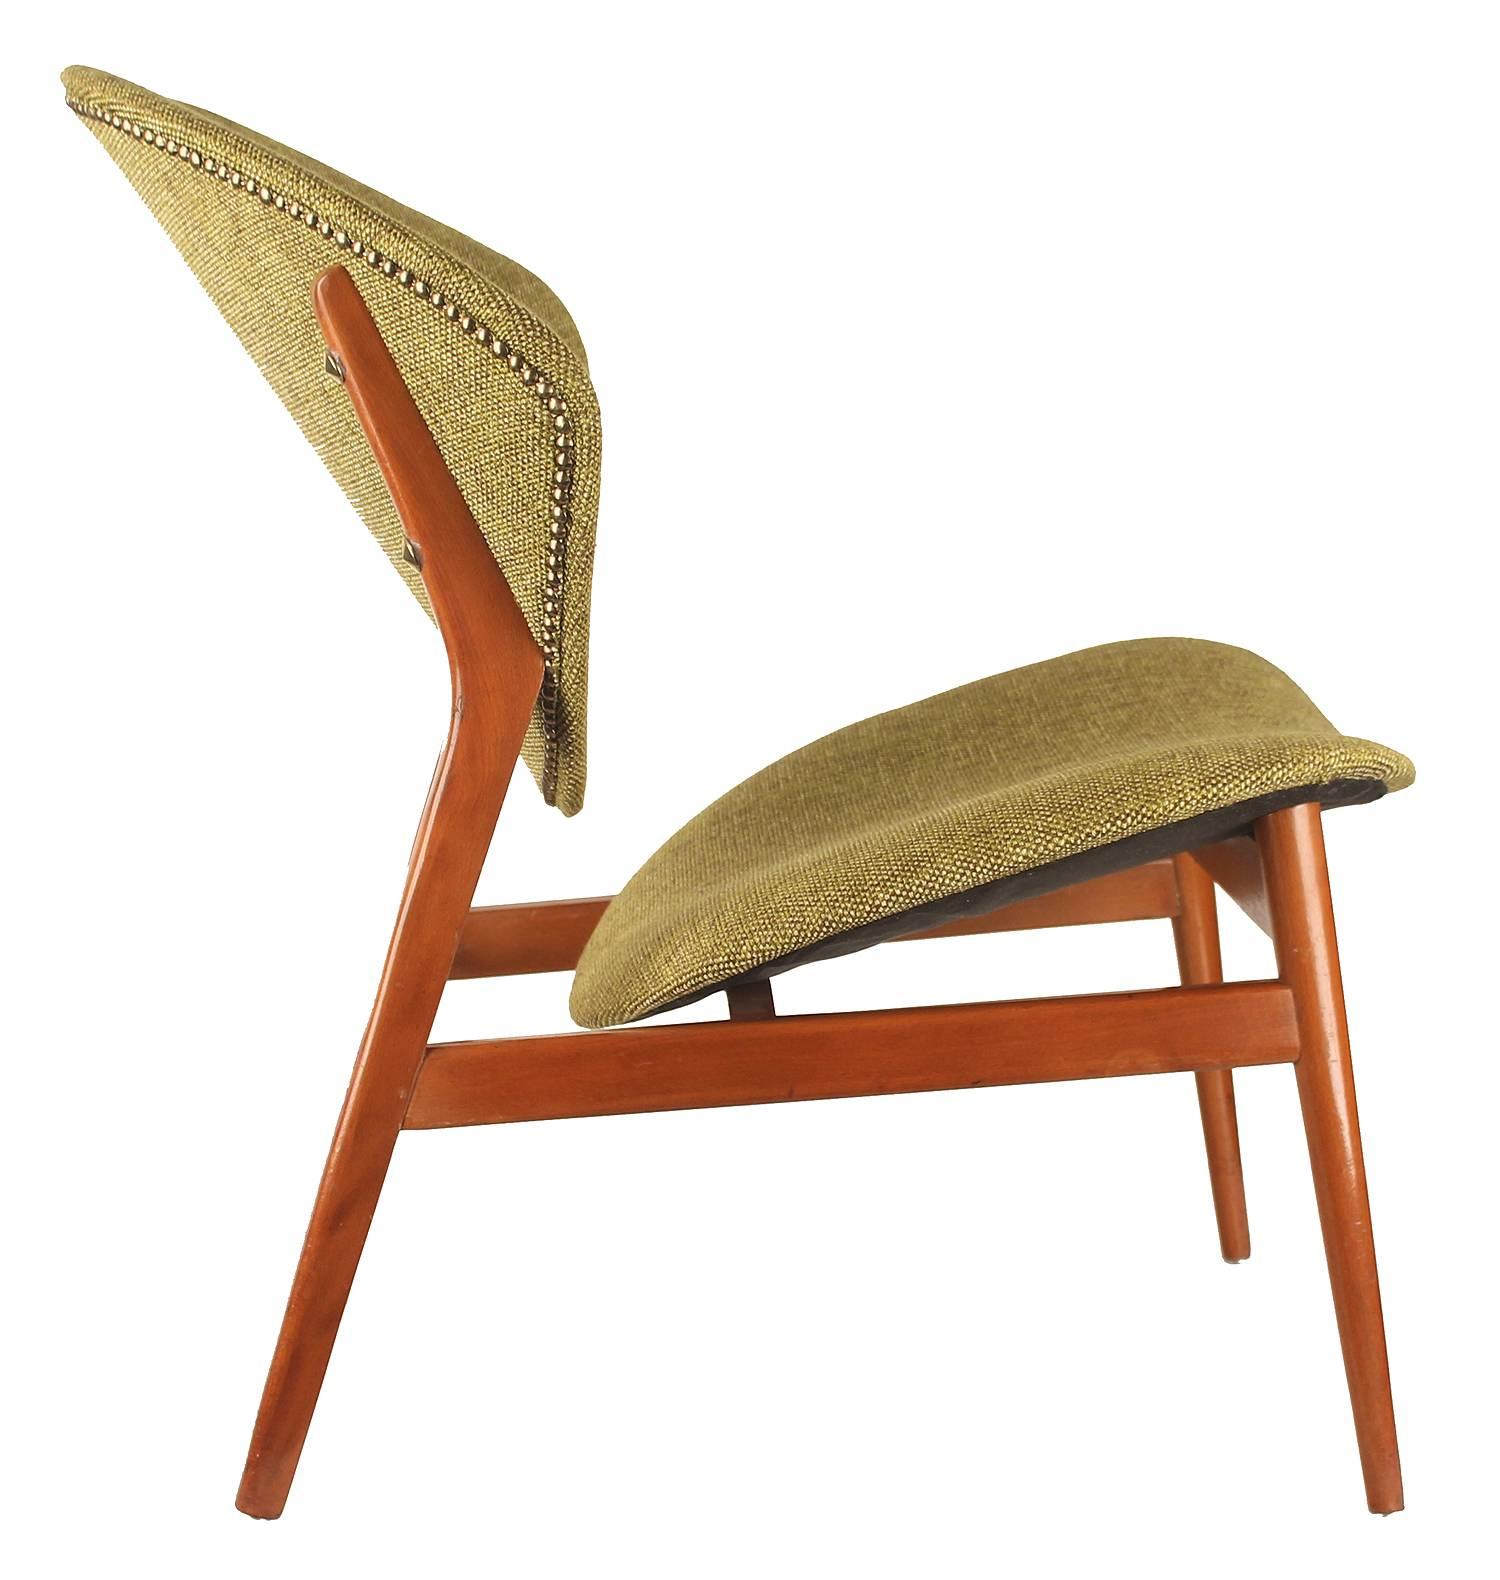 Pair of Sculptural Danish Modern Lounge Chairs - Juhl Jalk Era 2